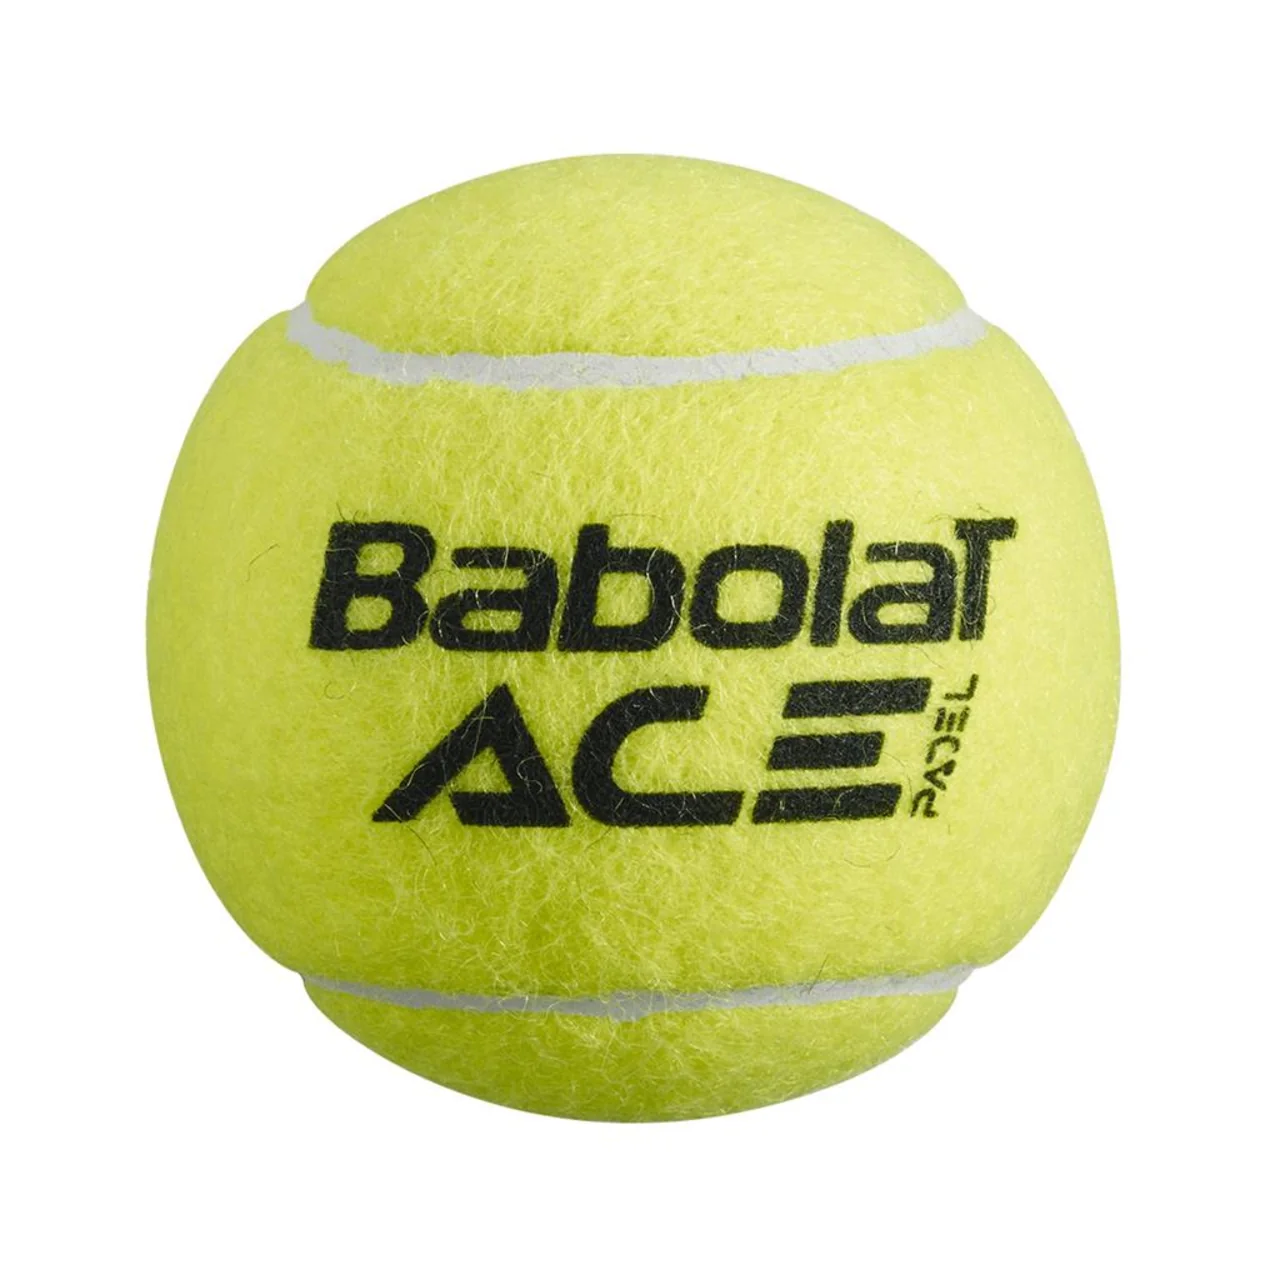 Babolat Padel Ball Ace 3 tubes